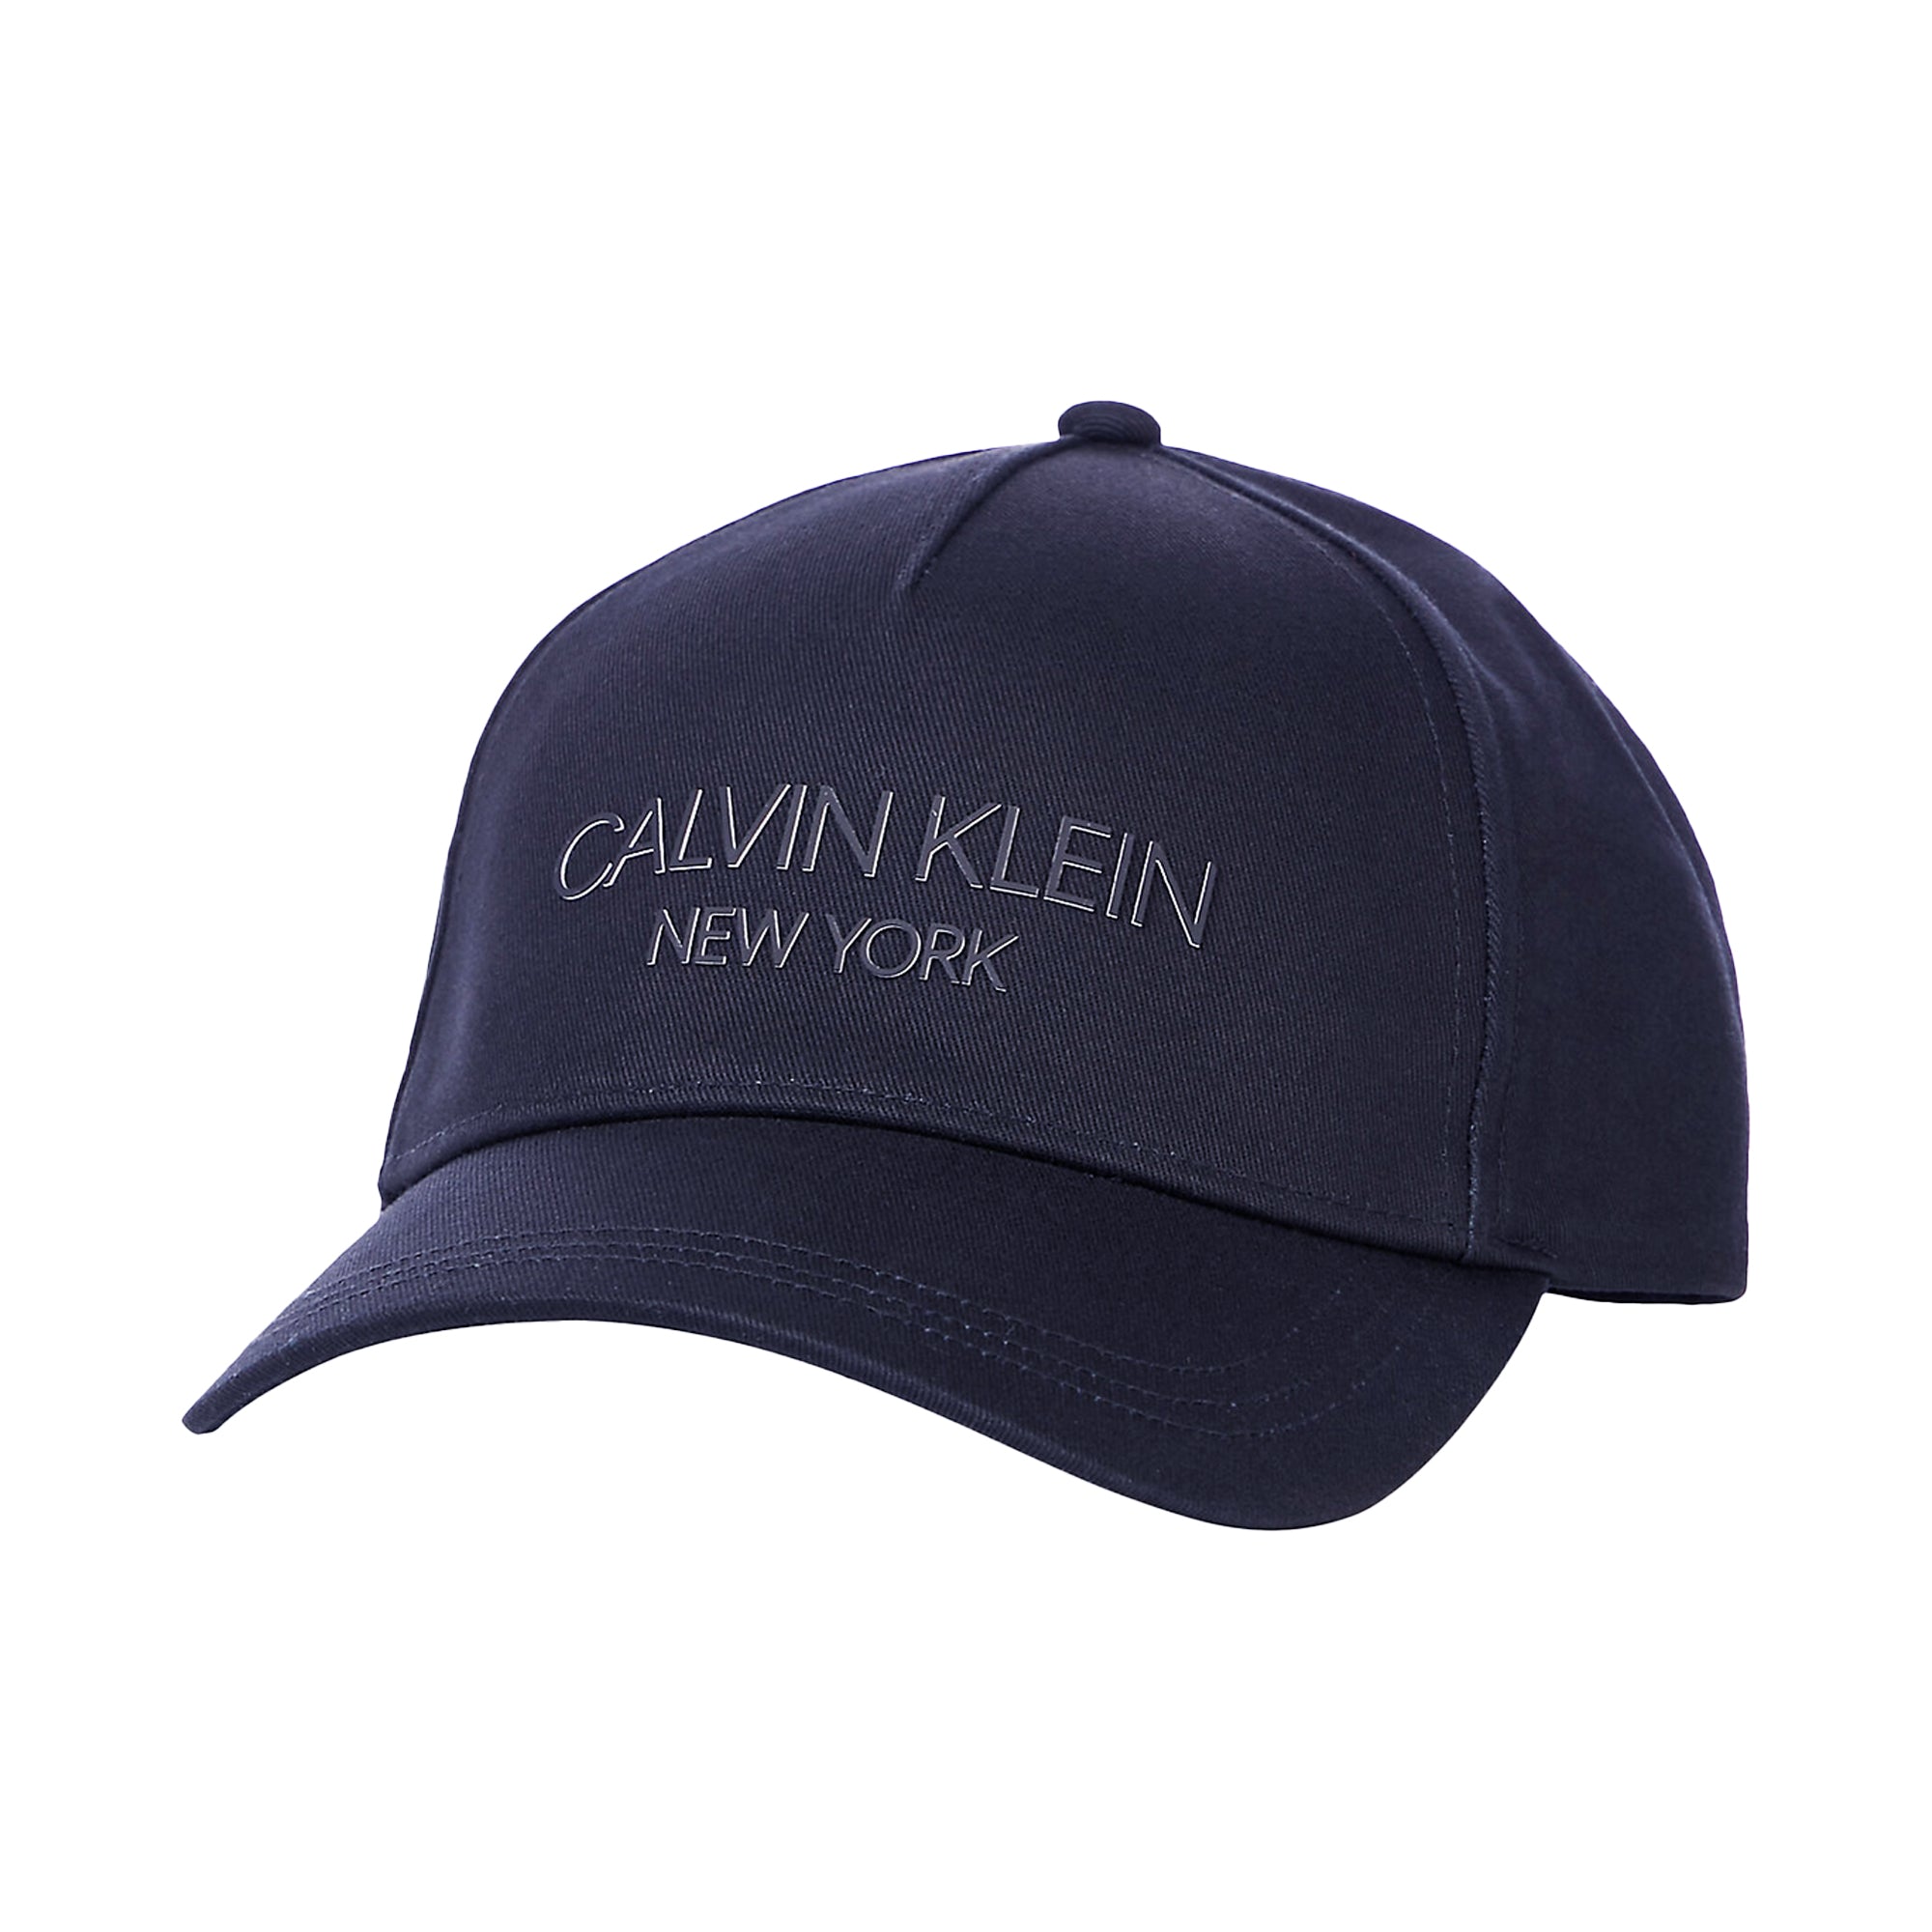 Calvin Klein Raised Text Cap - Navy